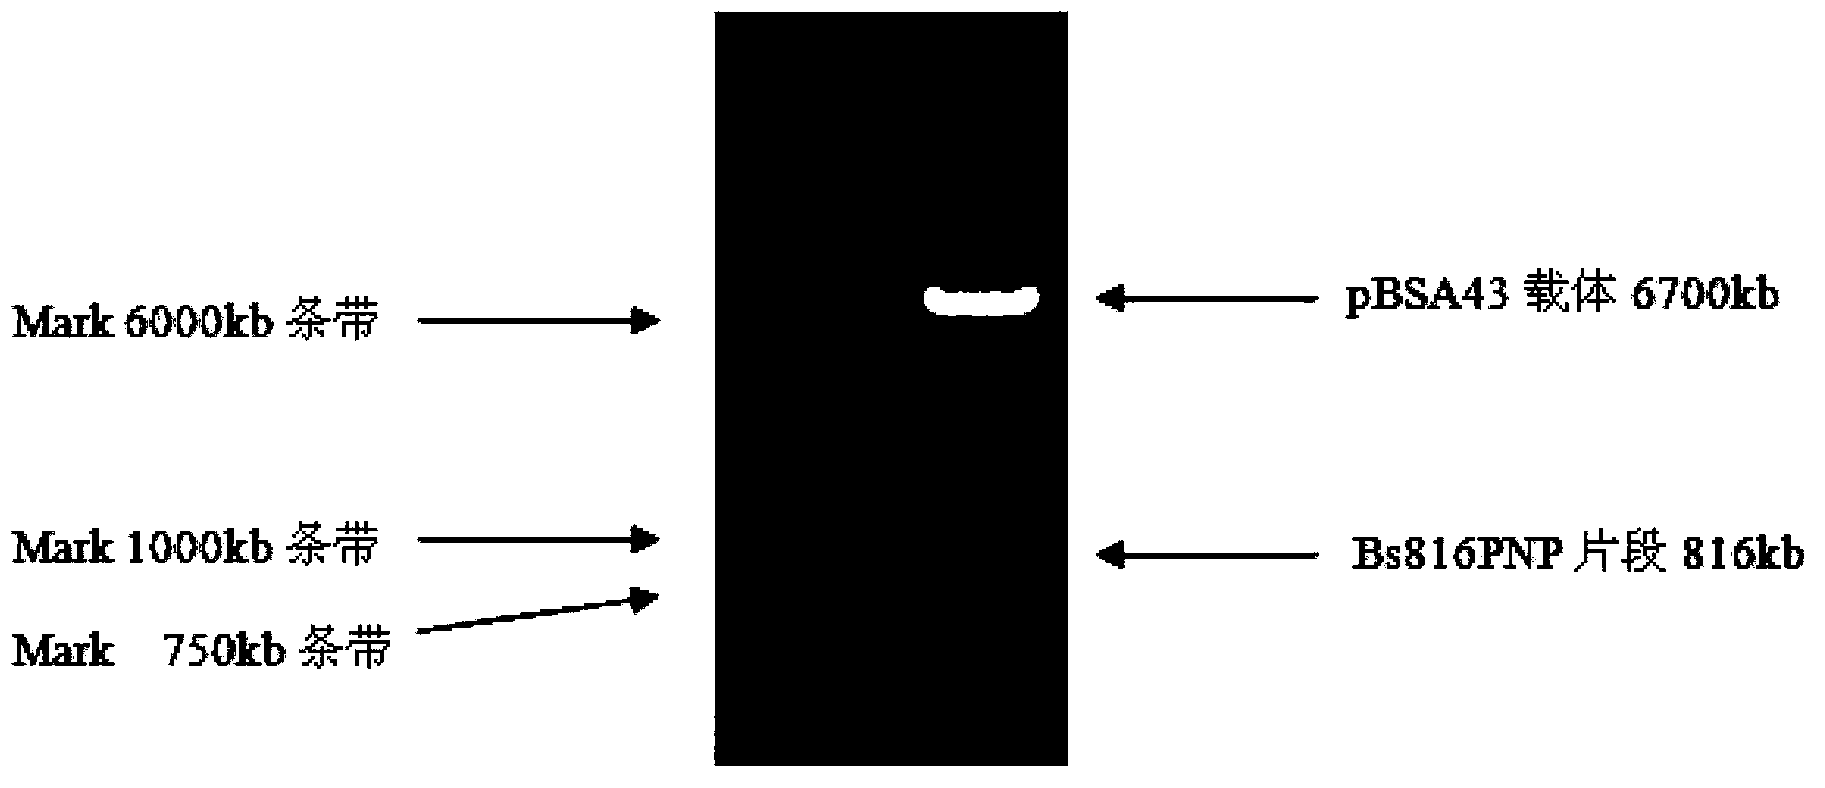 Production process for producing antiviral medicament ribavirin through bacillus amyloliquefaciens precursor addition fermentation method